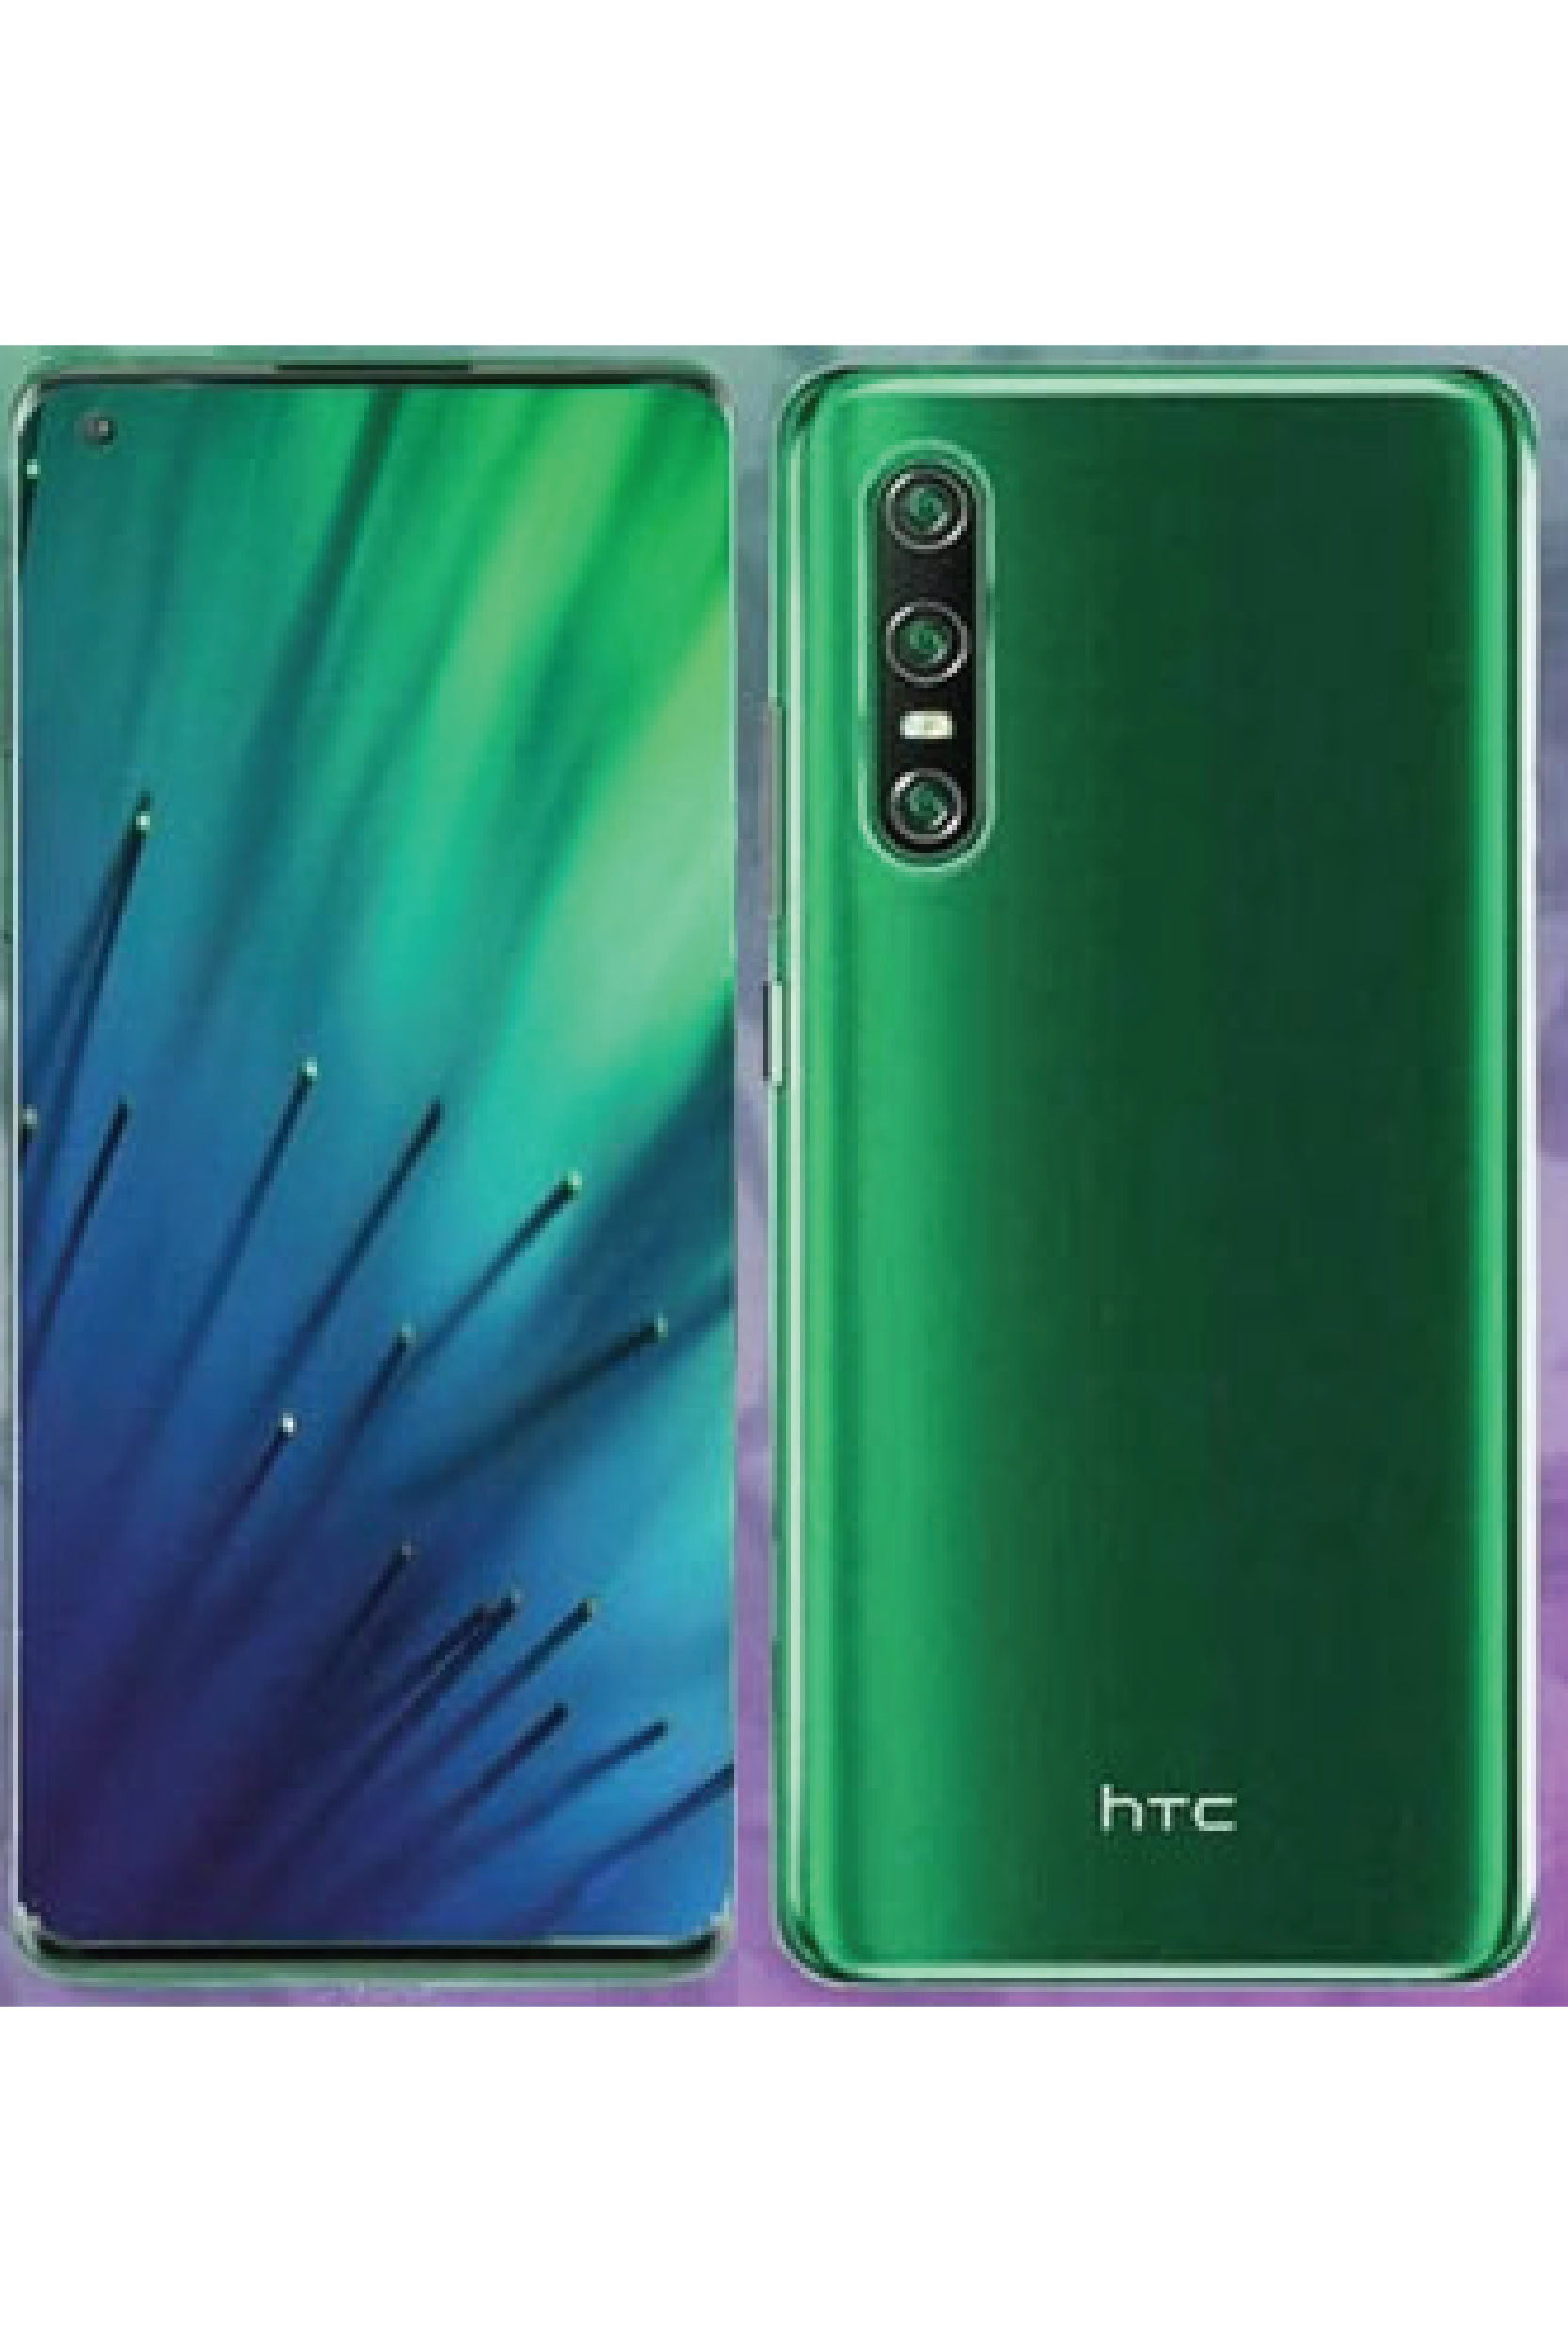 HTC Desire 20 Pro Price in Pakistan & Specs | ProPakistani